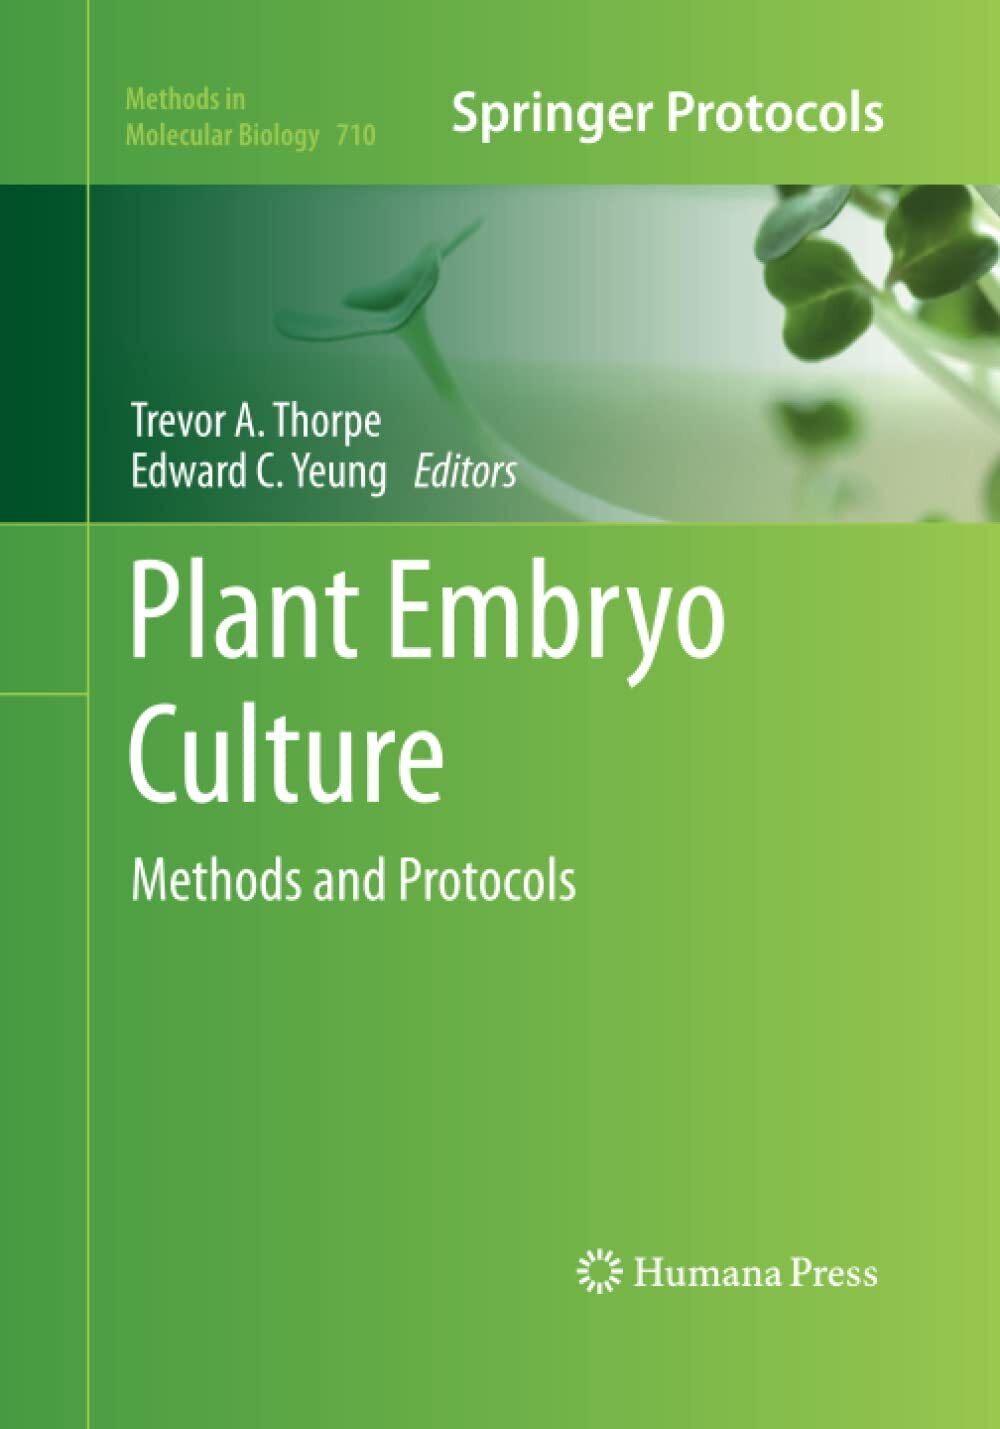 Plant Embryo Culture - Trevor A. Thorpe - Humana, 2016